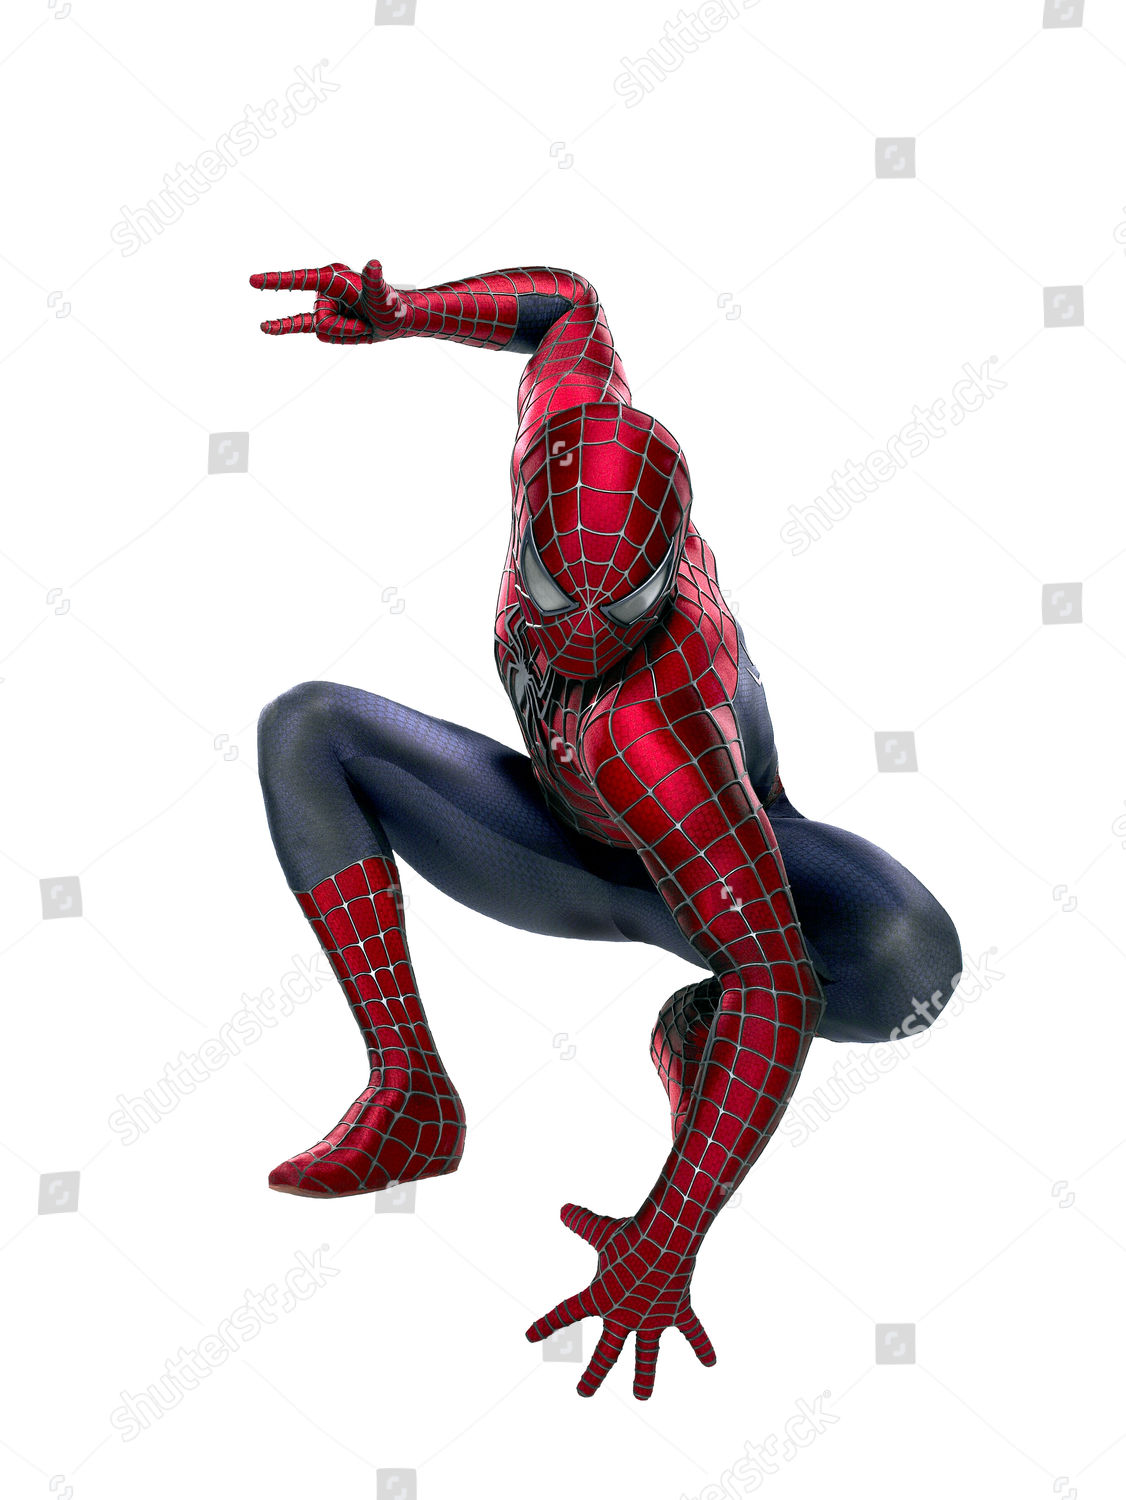 spiderman 3 ita